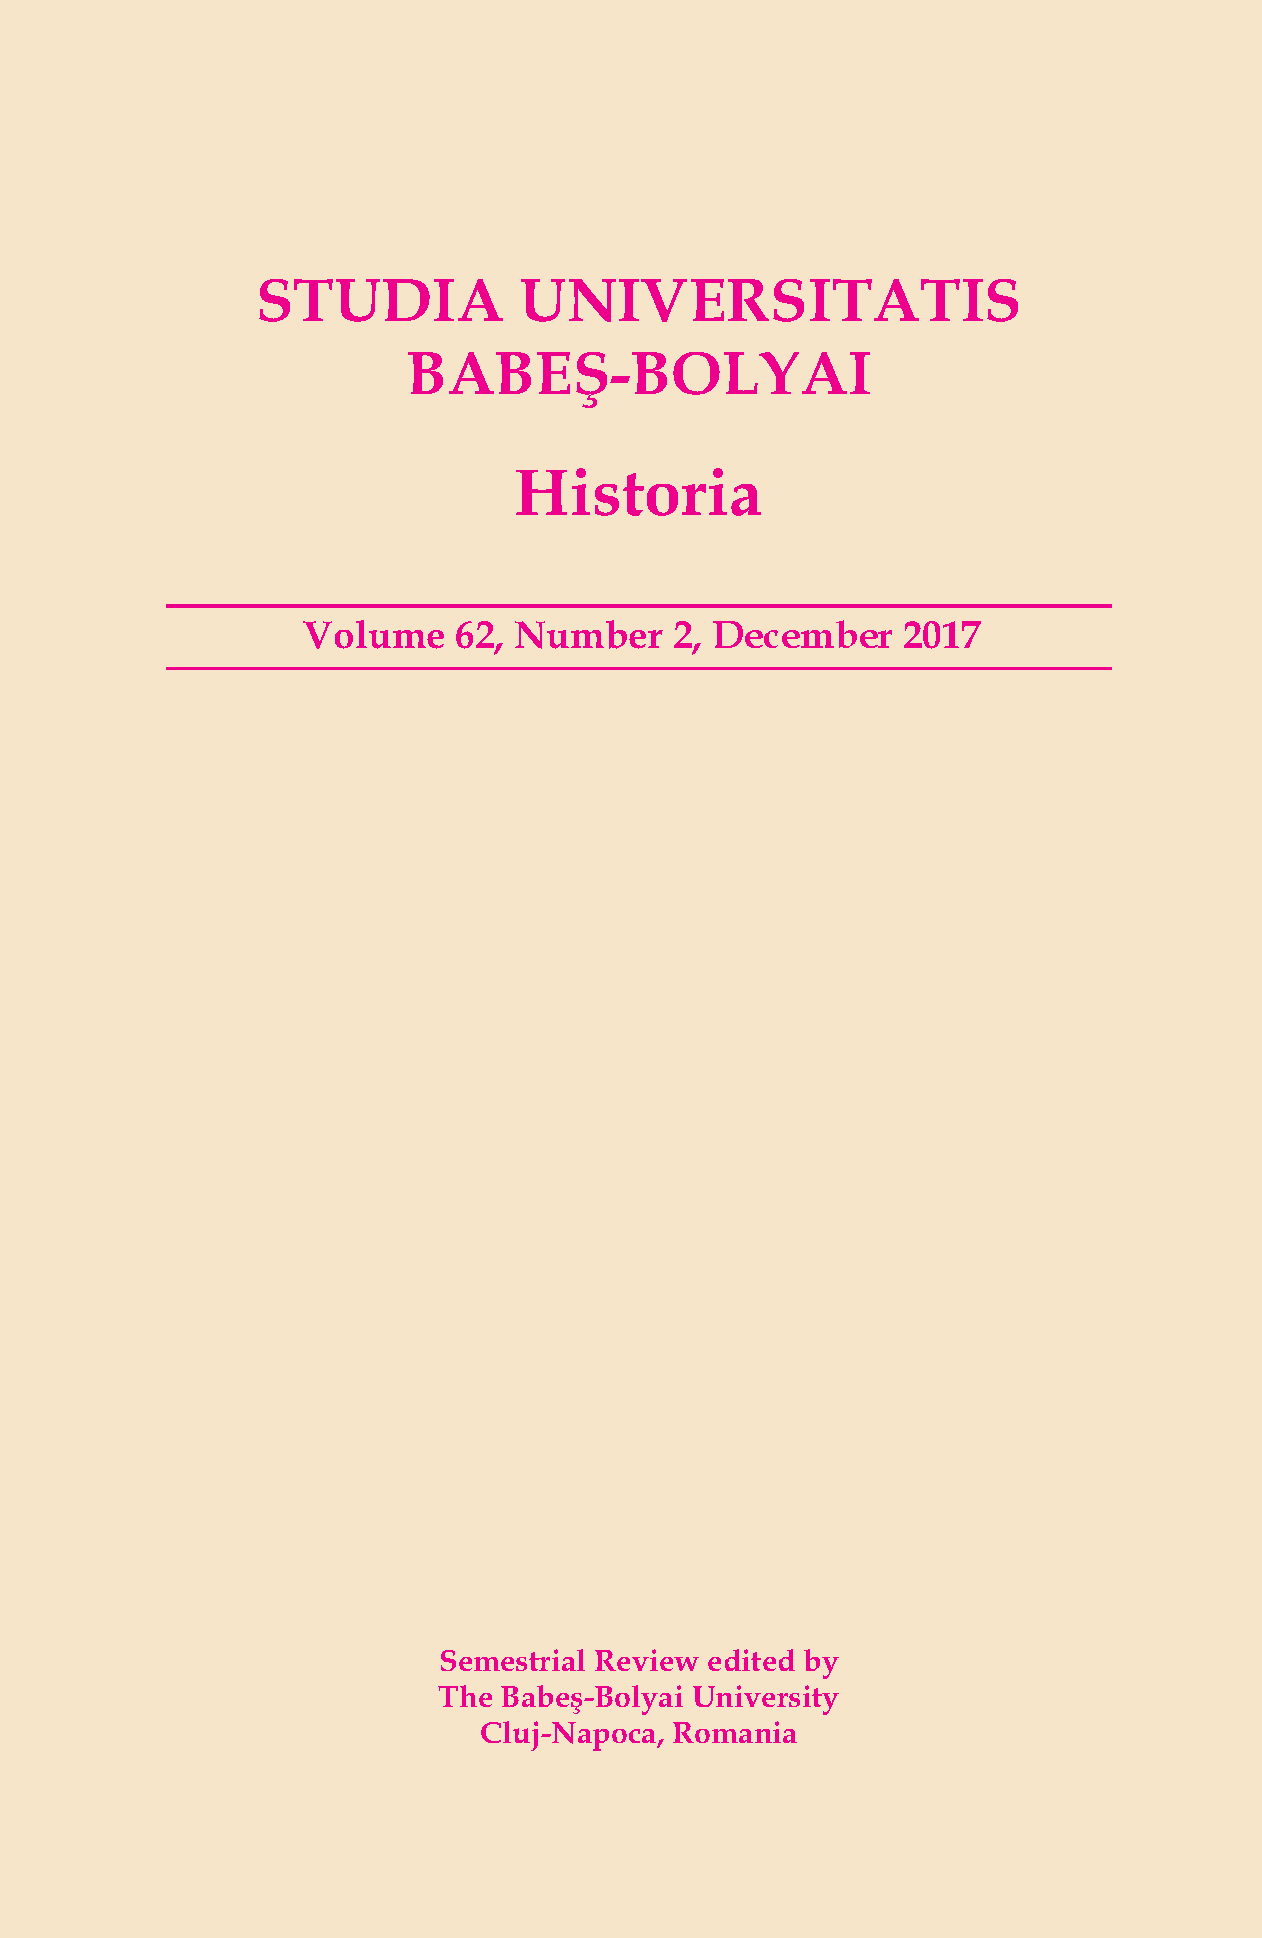 STUDIA UBB HISTORIA, Volume 62 (LXII), No. 2, December 2017